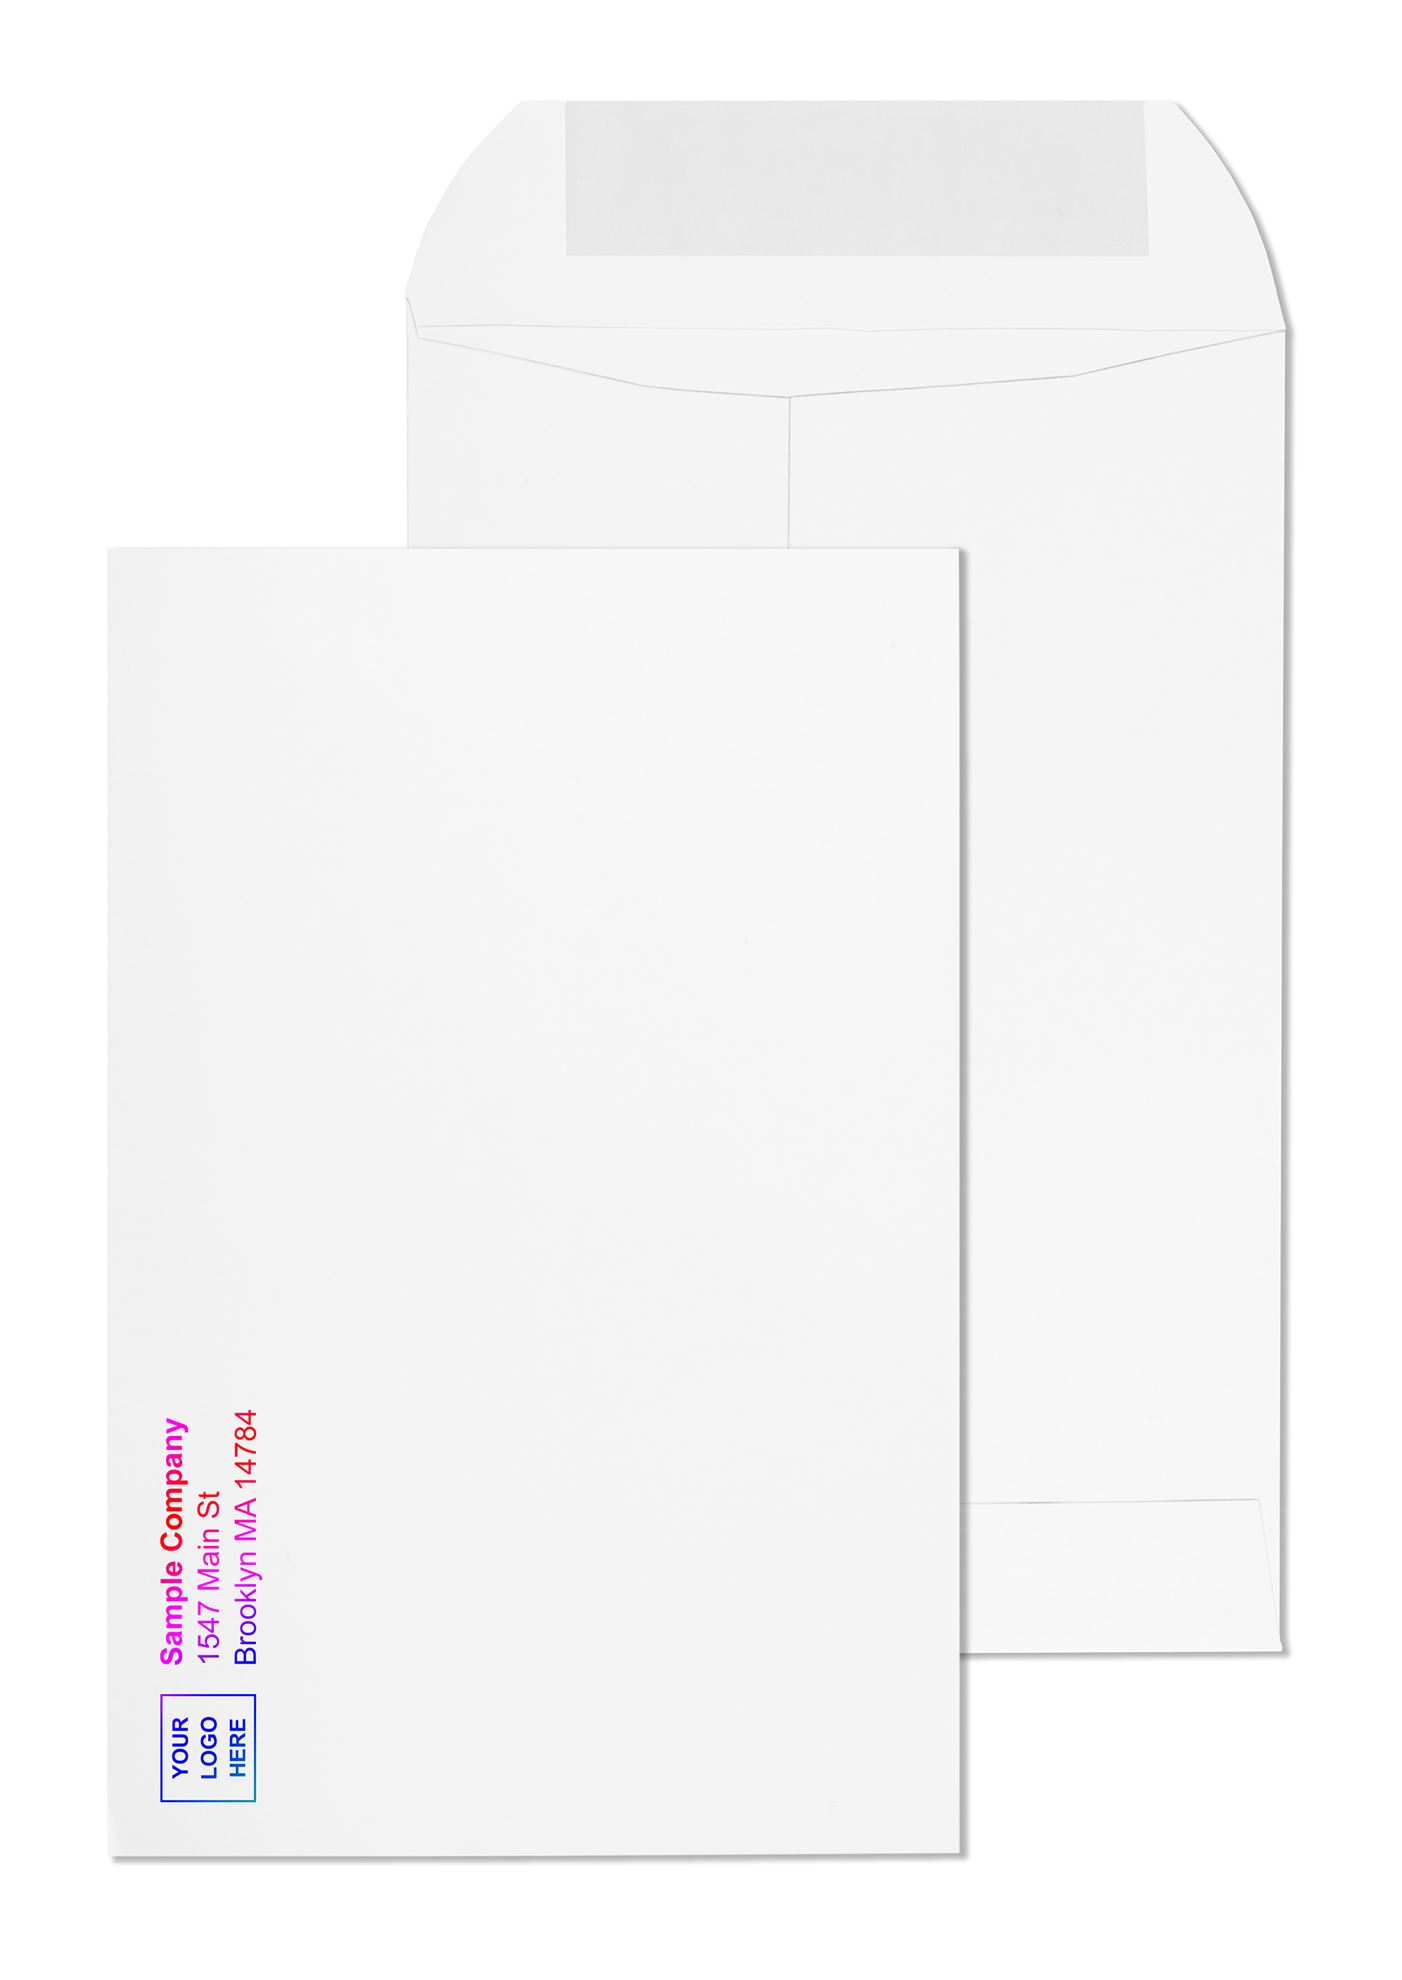 9x12 Envelopes  Order Custom 9x12 Envelopes - U.S. Press